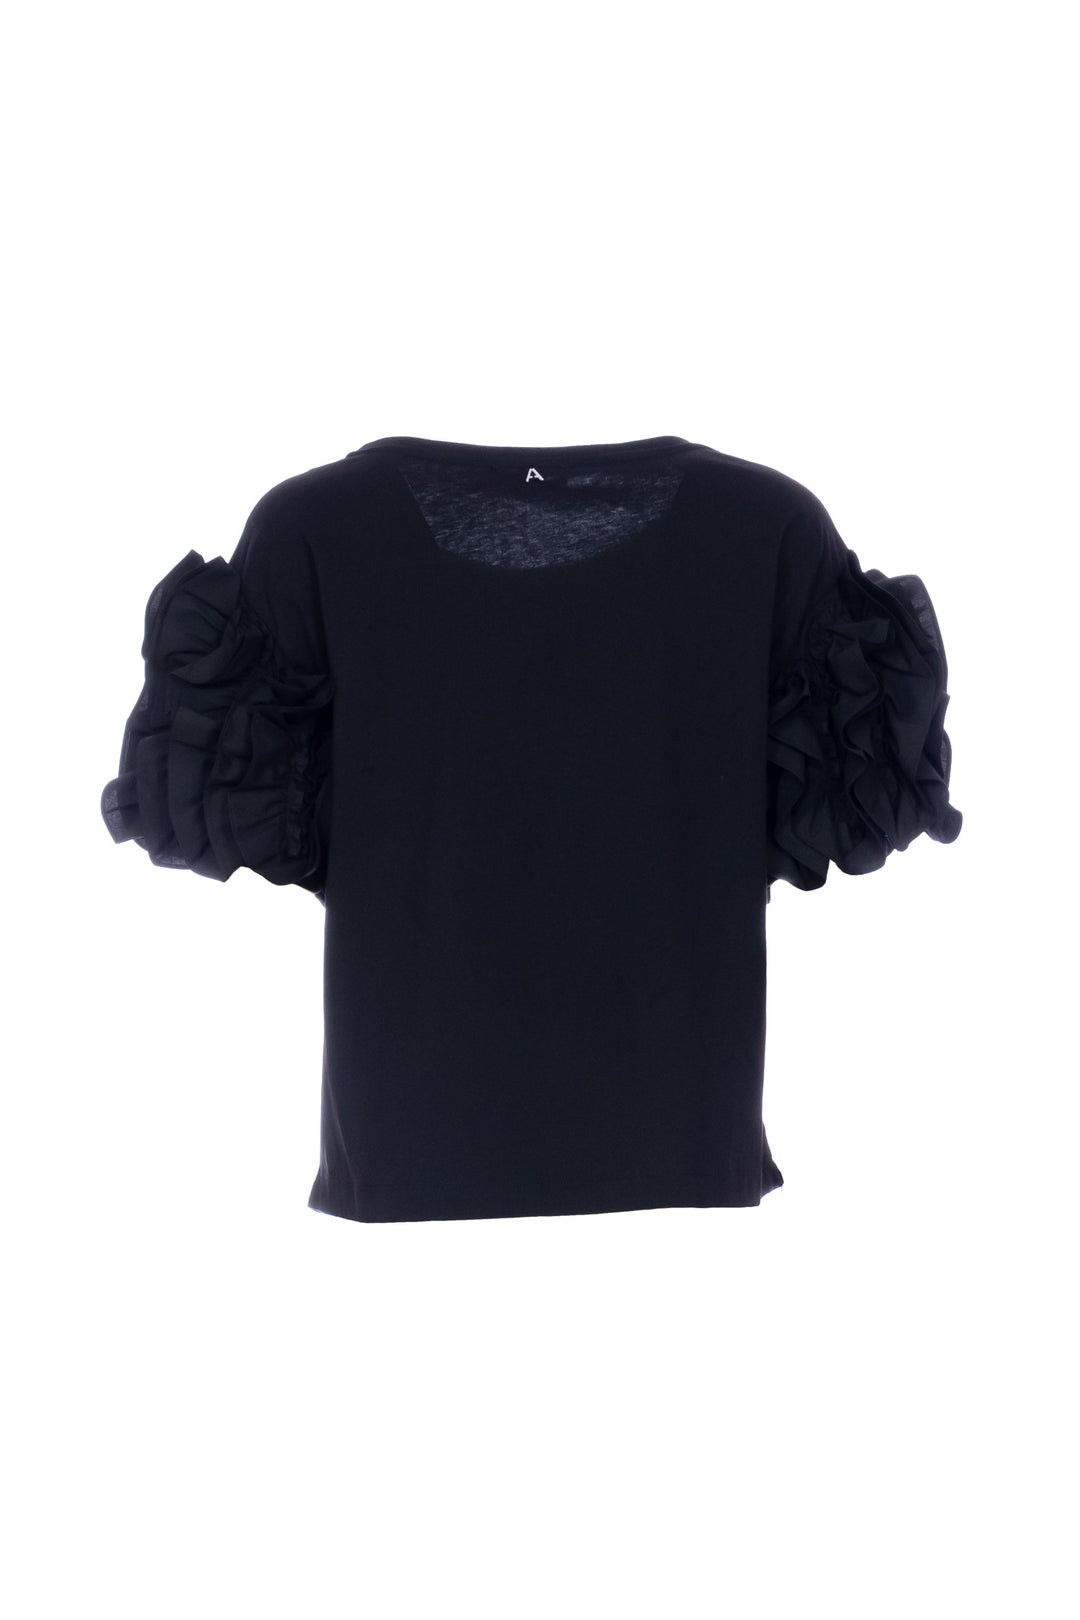 ACTITUDE TWINSET T-shirt nera con volant in popeline - Mancinelli 1954